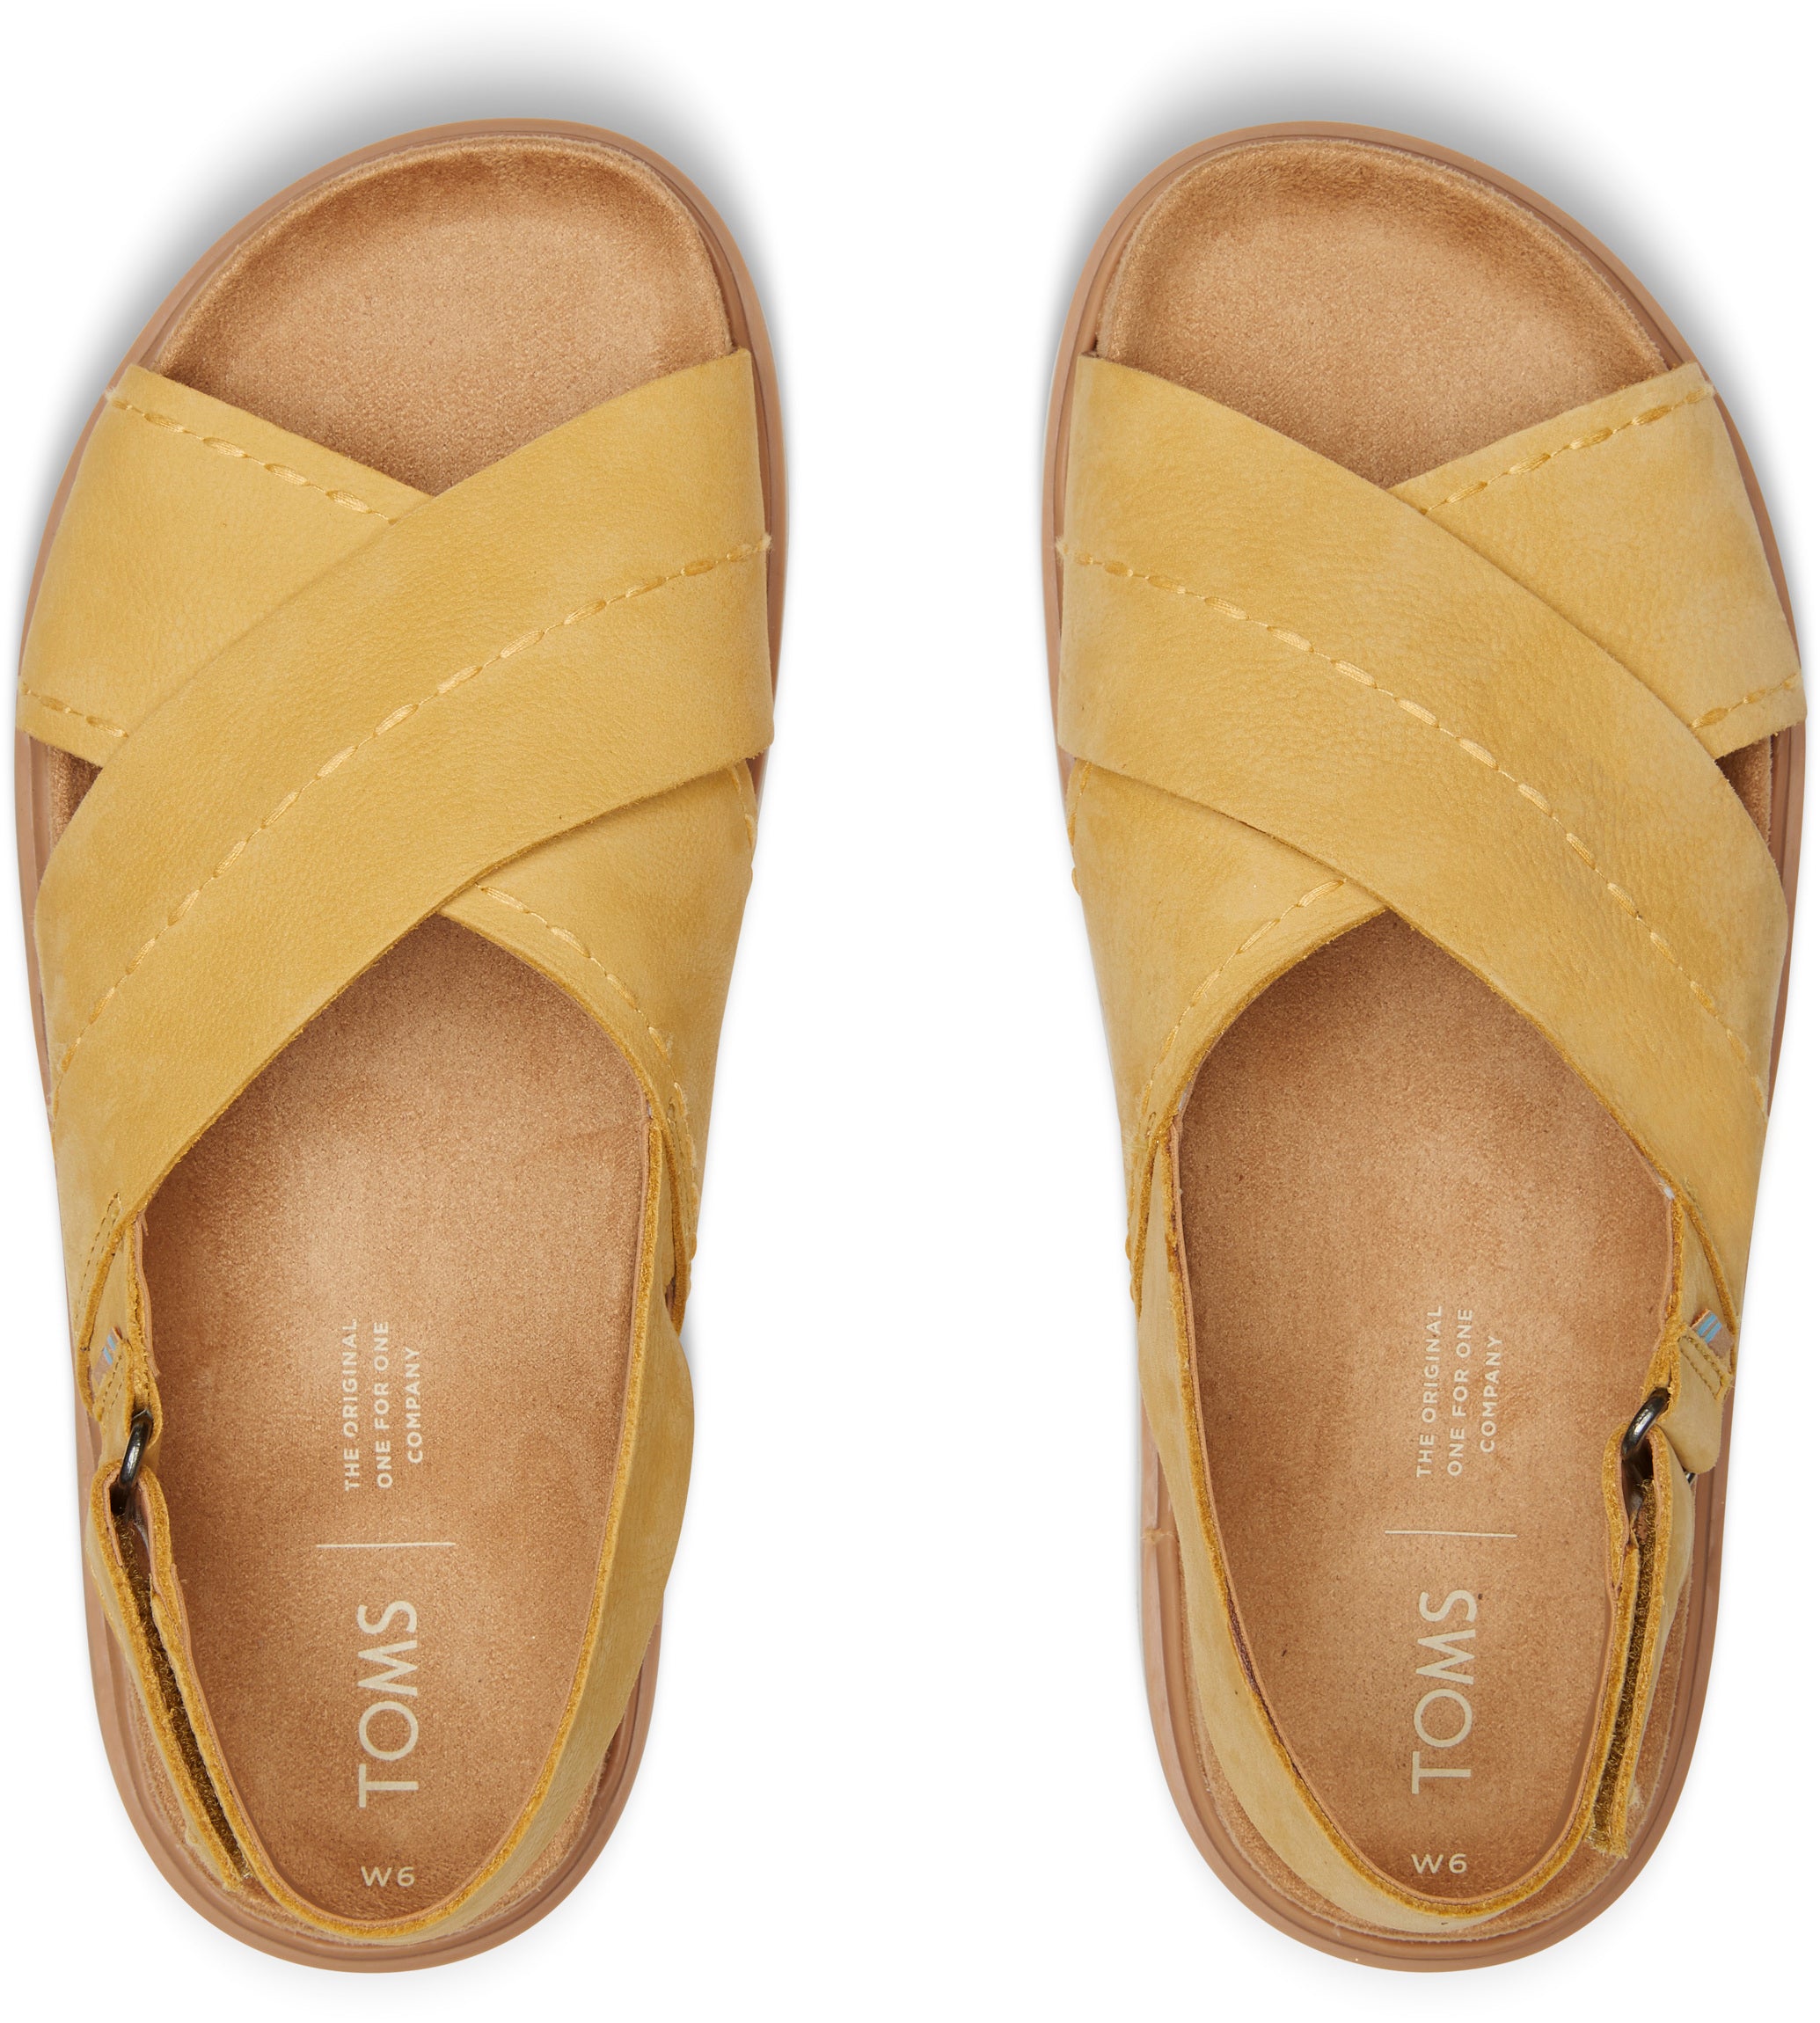 Dámské žluté sandály TOMS Marisa Sandals